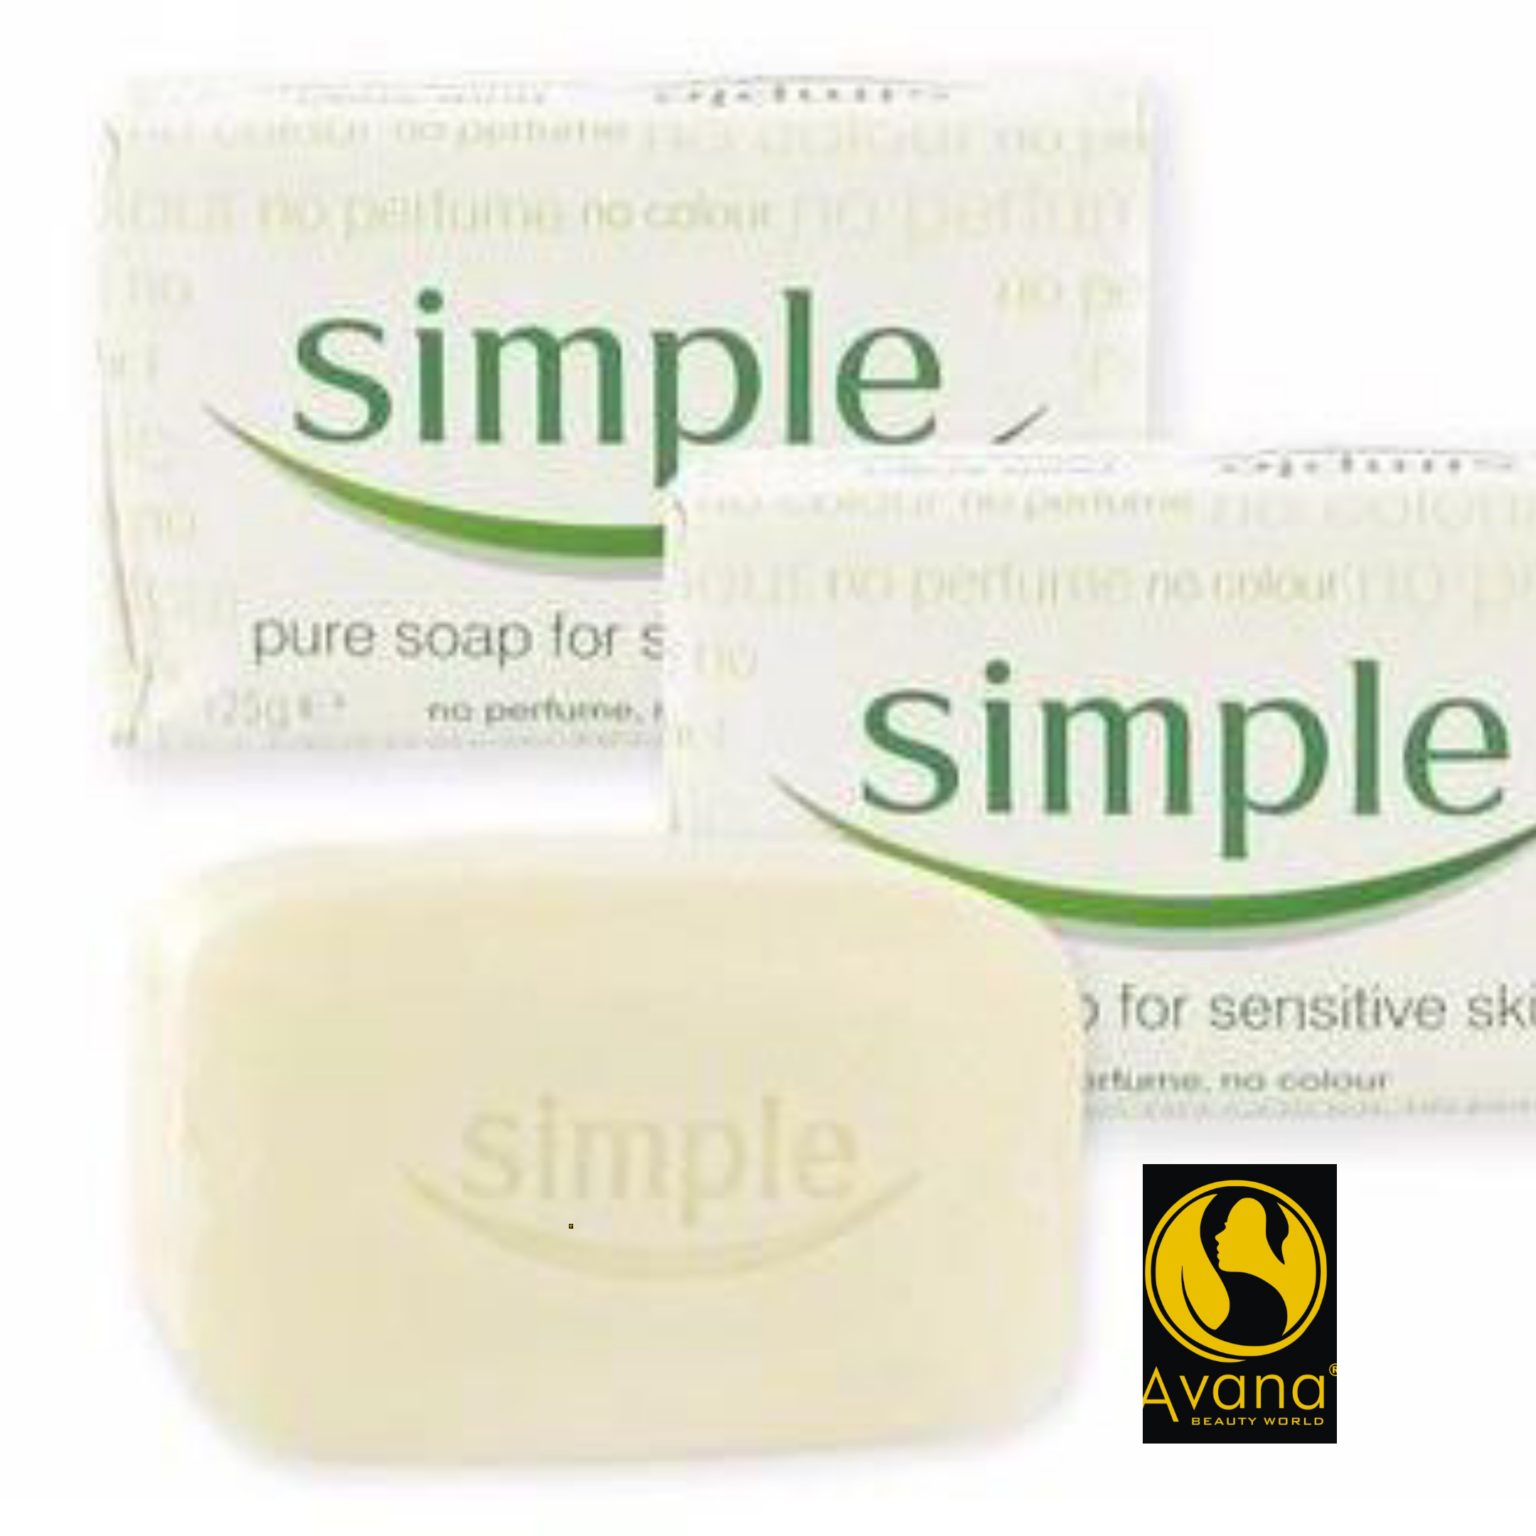 Simple Moisturizing Body Soap For Sensitive Skinby 6pcs Avana